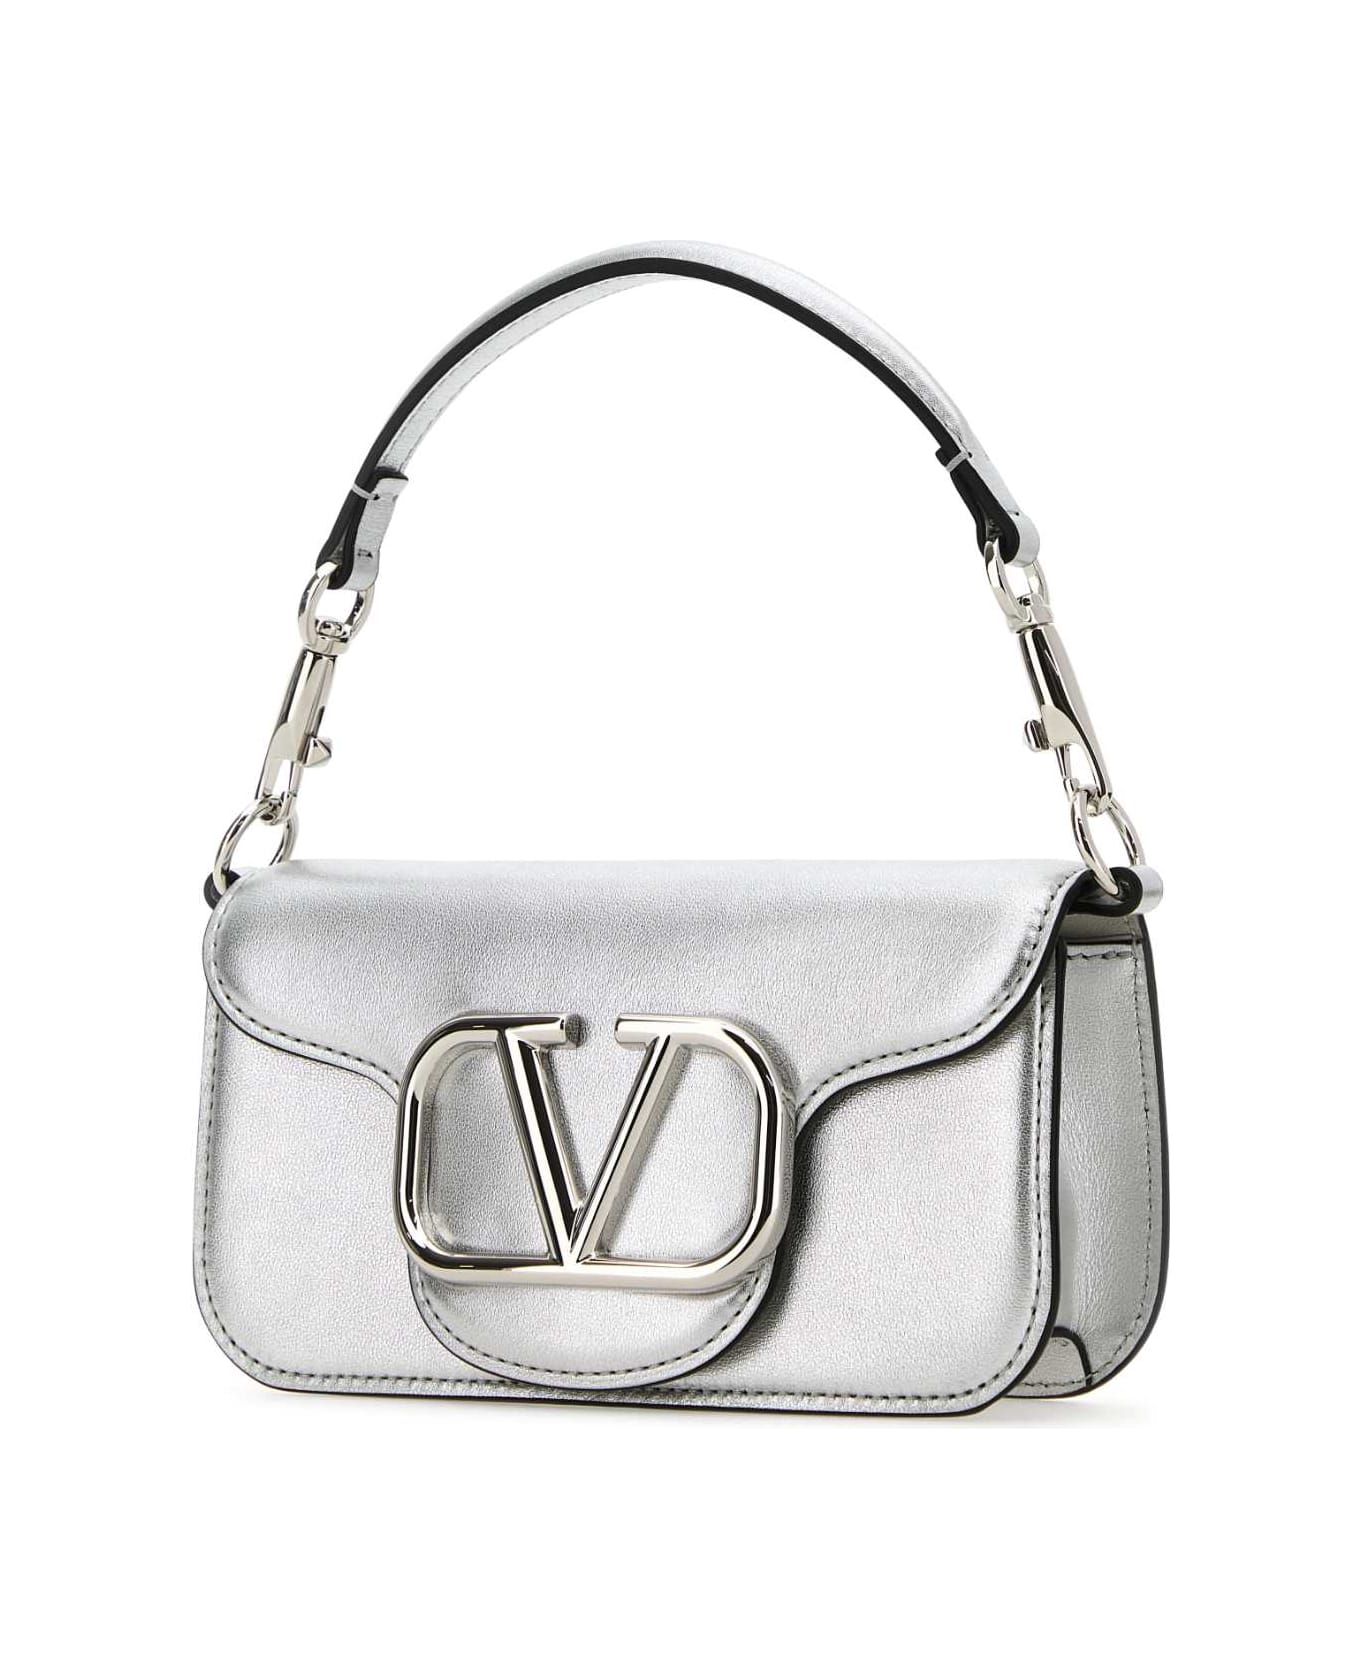 Valentino Garavani Silver Leather Locã² Handbag - SILVER